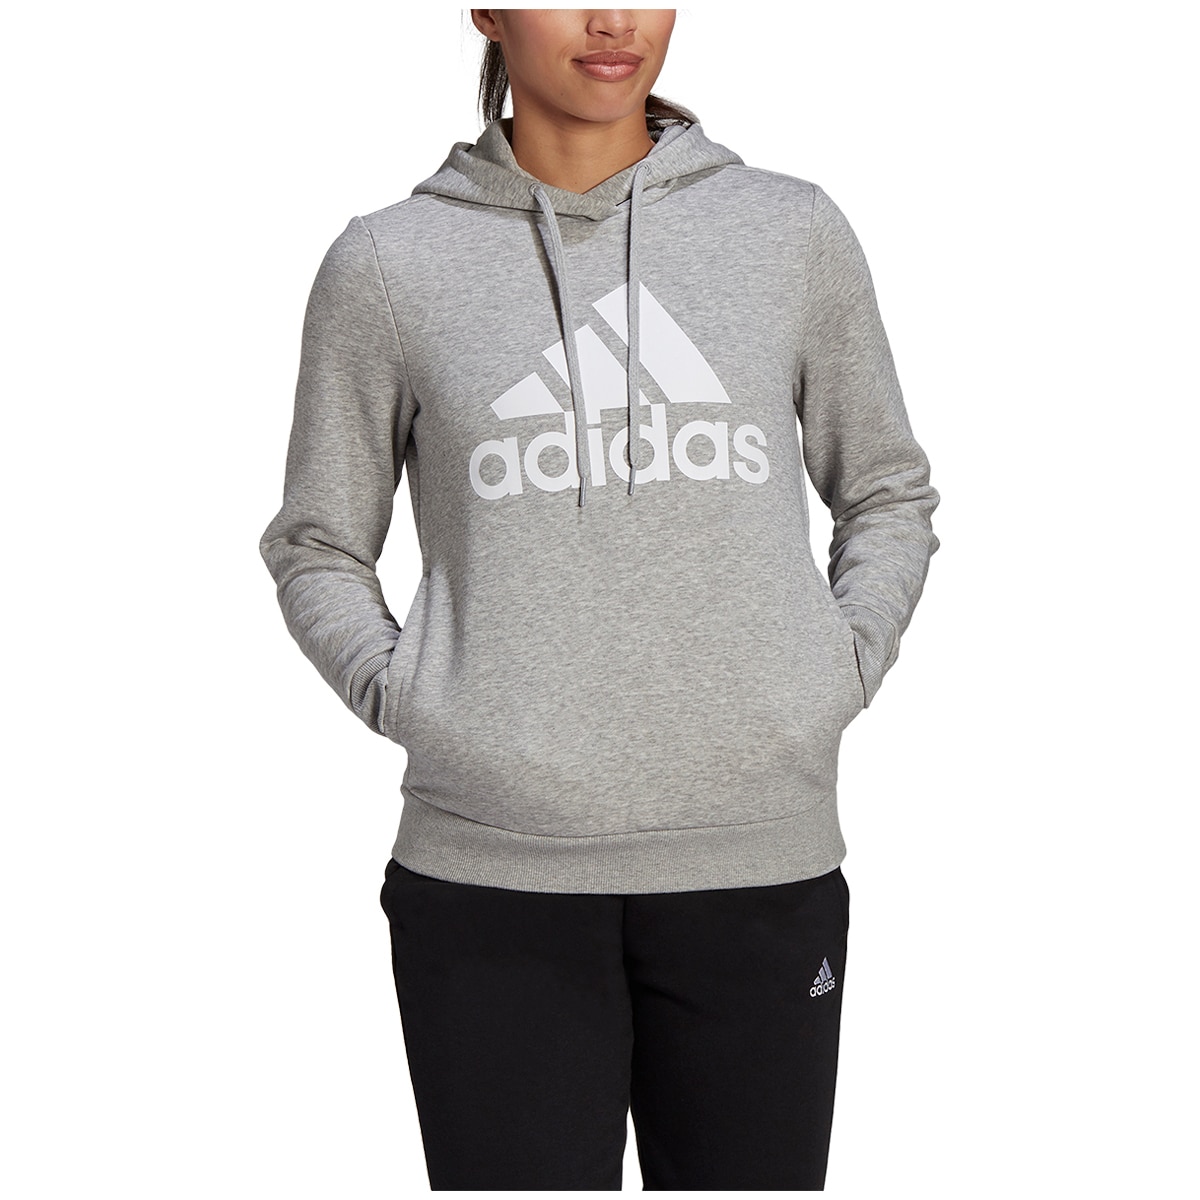 Adidas Women’s Hoodie - Grey/White | Costco Australia